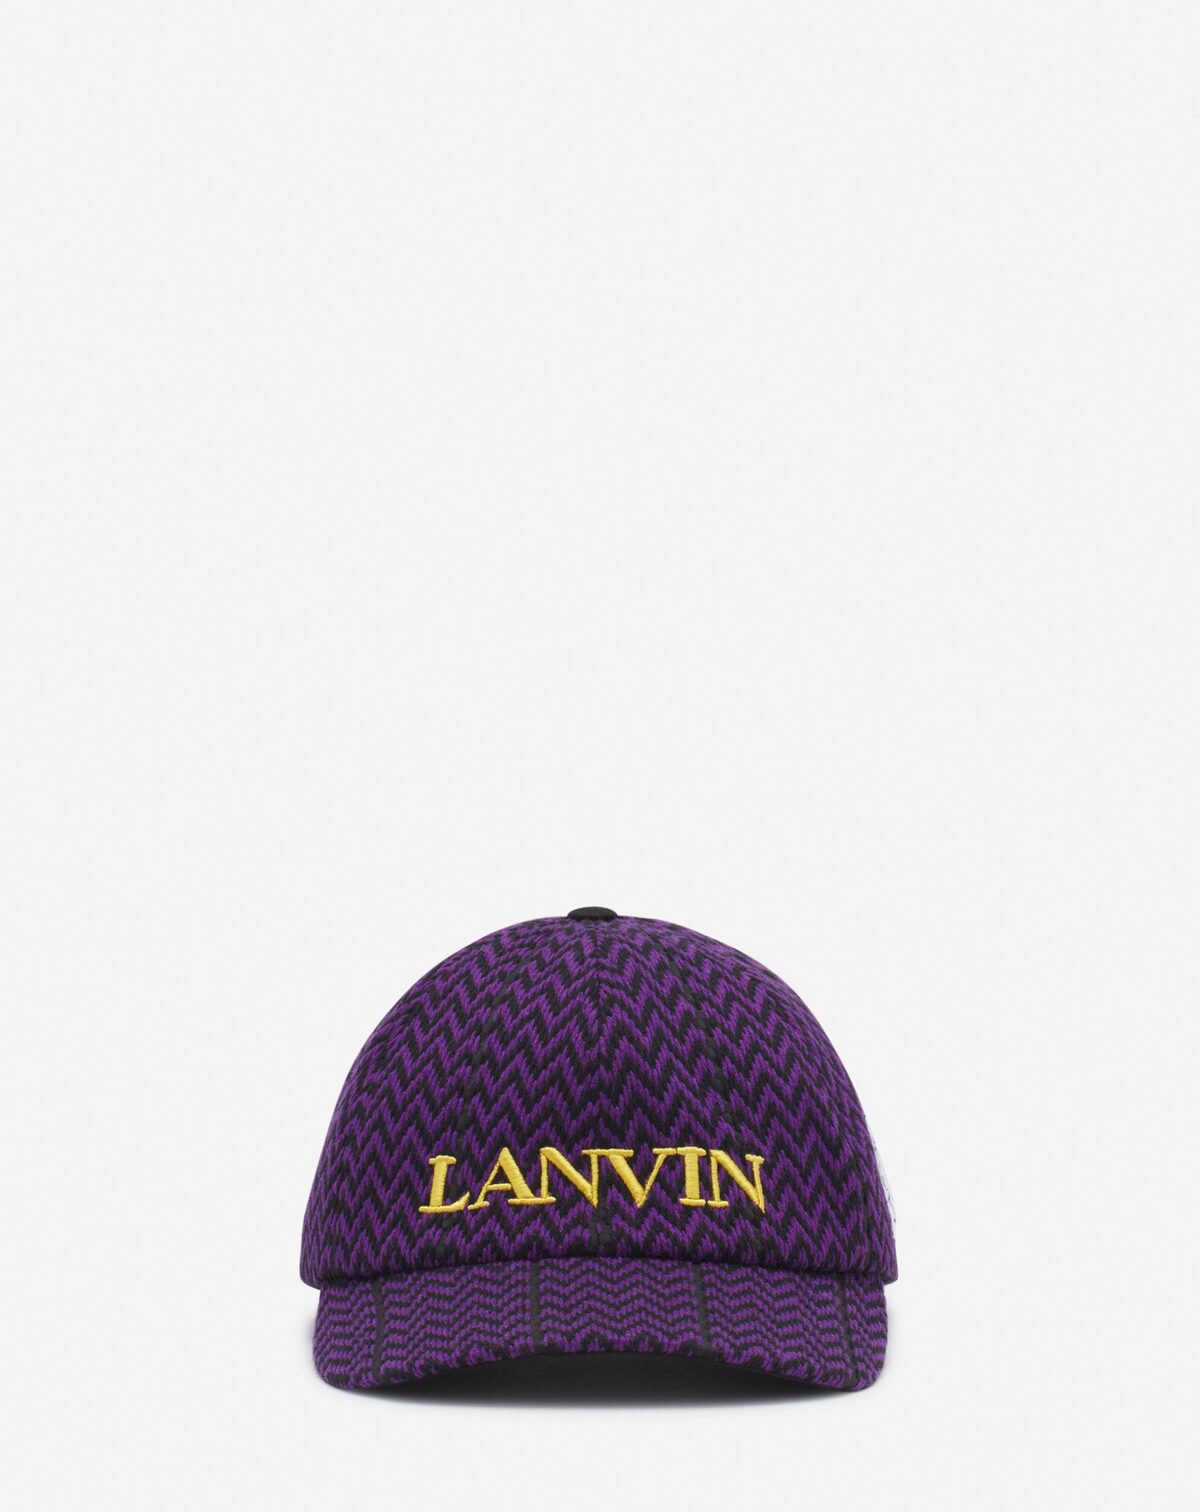 LANVIN X FUTURE CURB COTTON CAP Purple